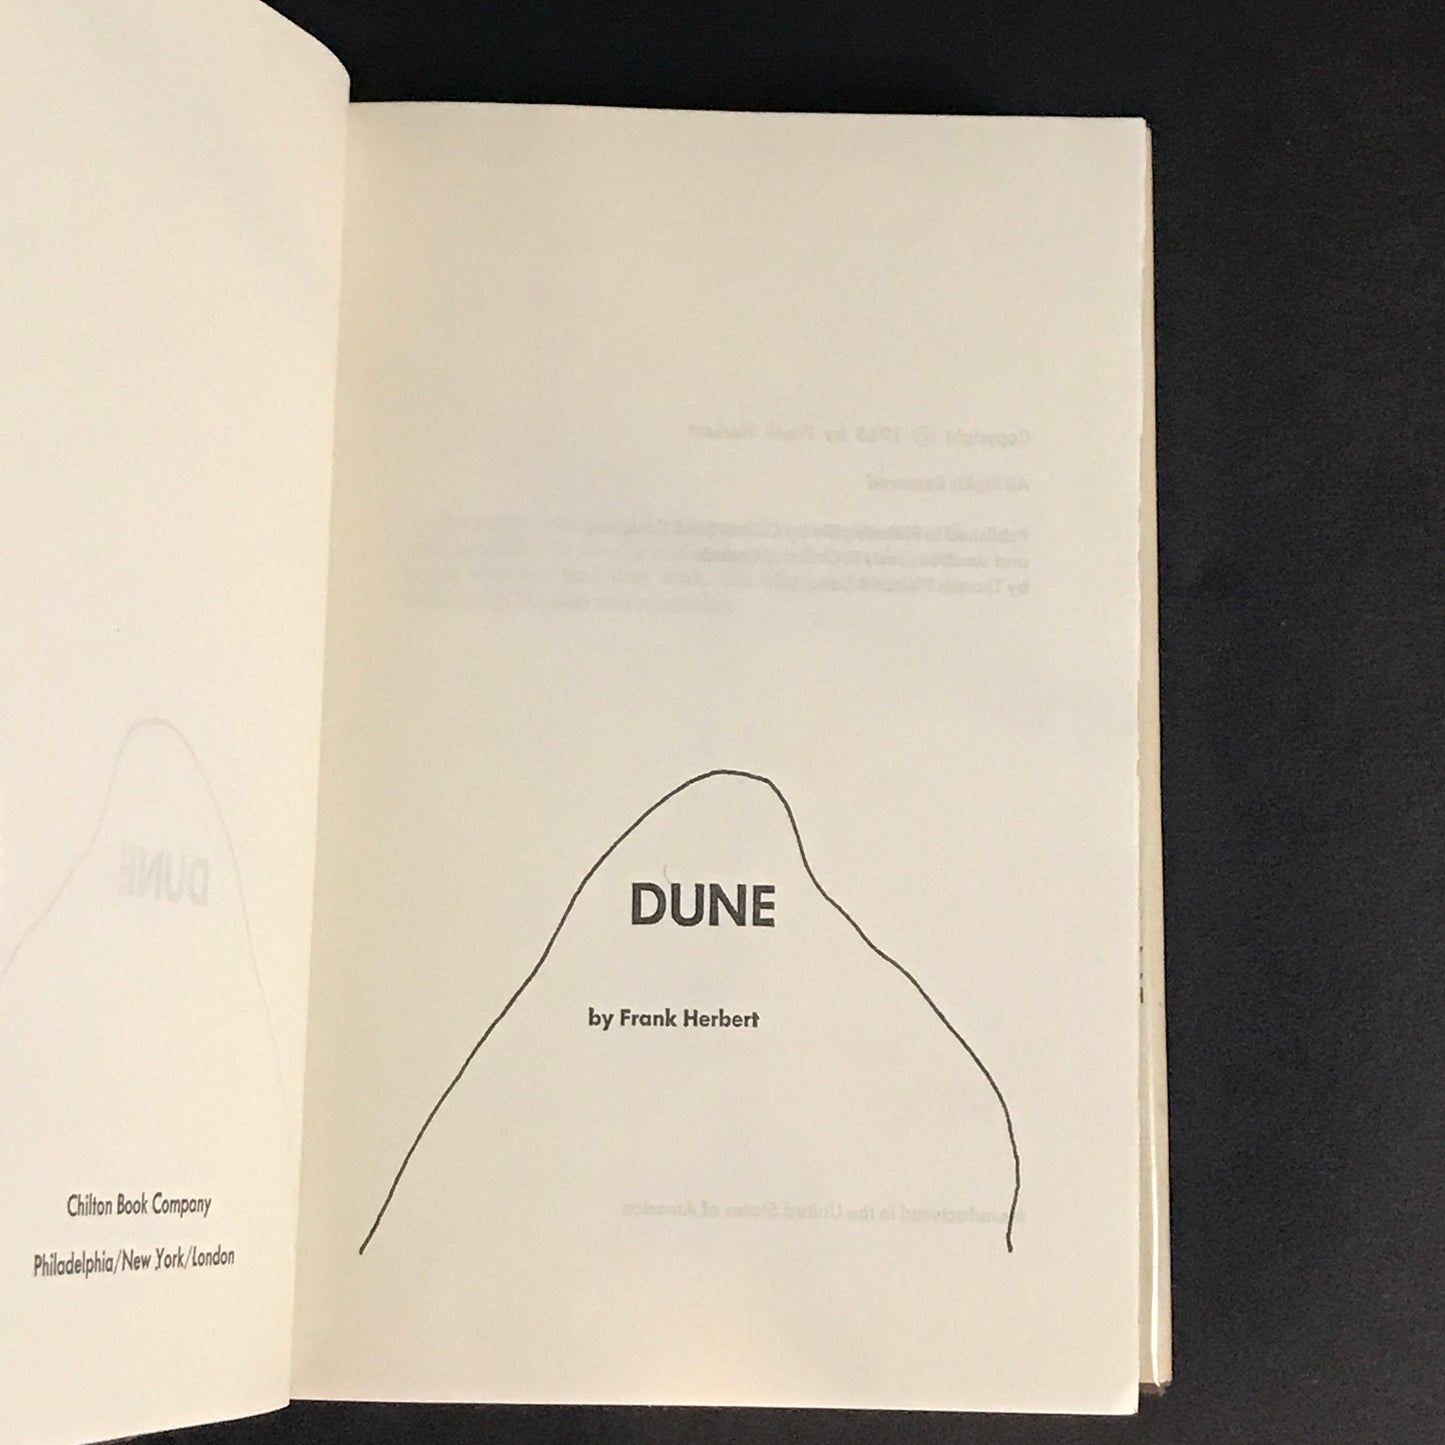 Dune - Frank Herbert - Early Book Club Edition - Y49 Gutter Code - 1965